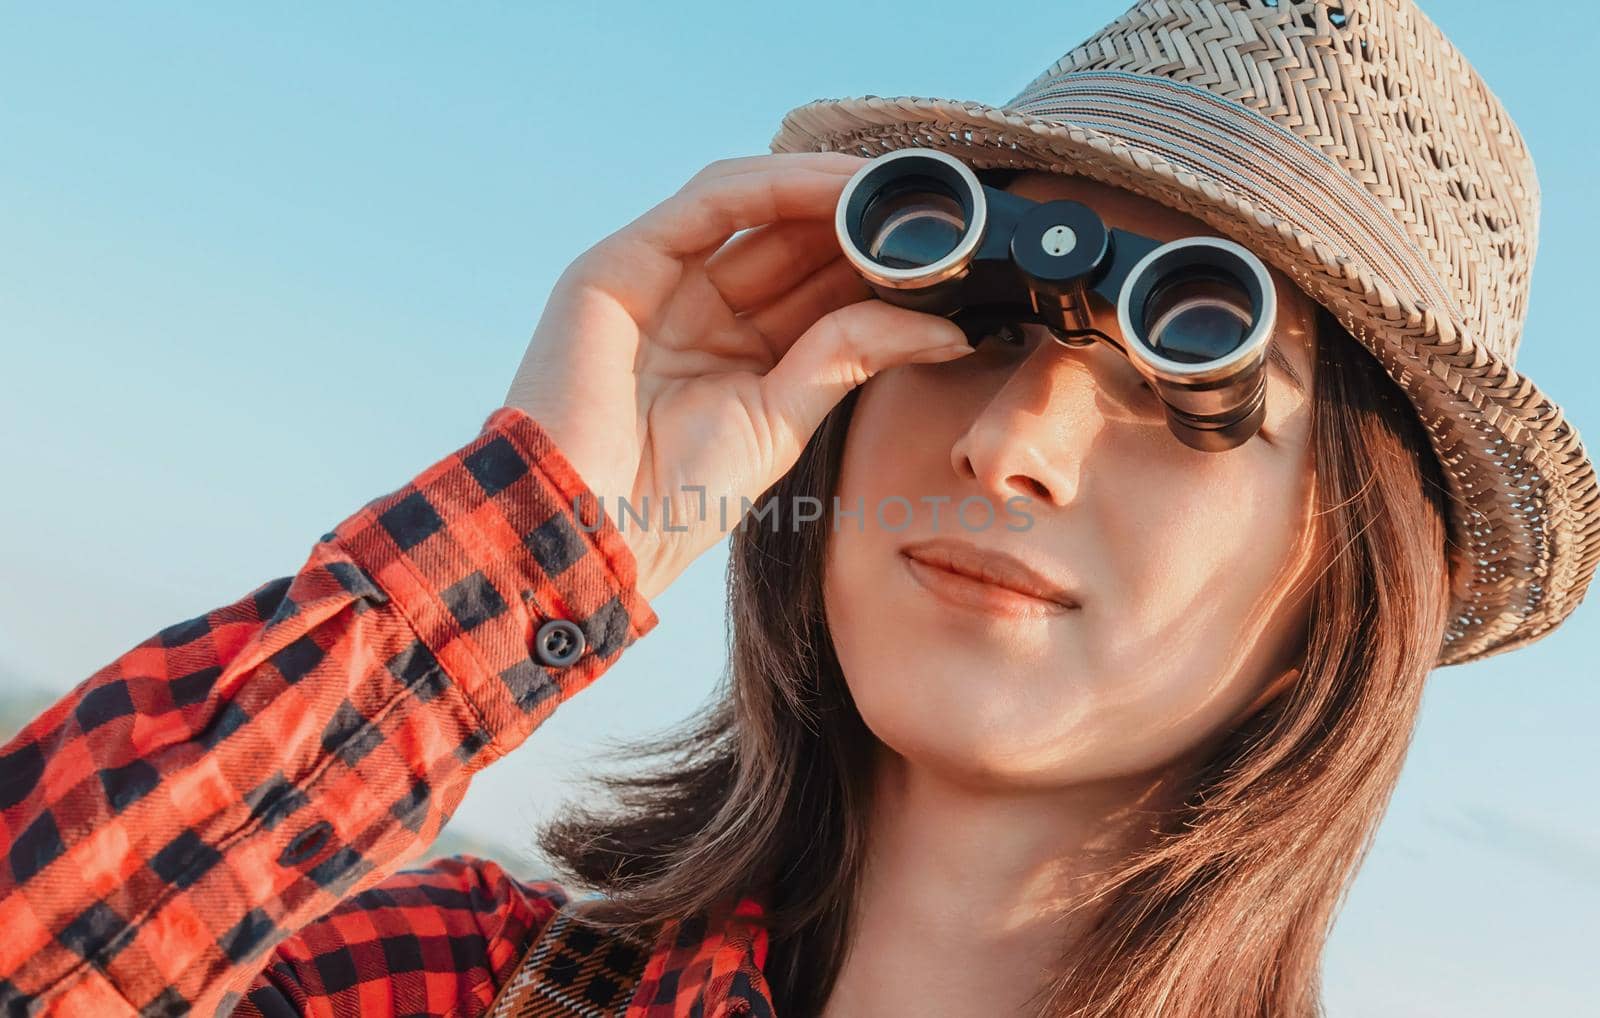 Traveler girl looking through binoculars by alexAleksei